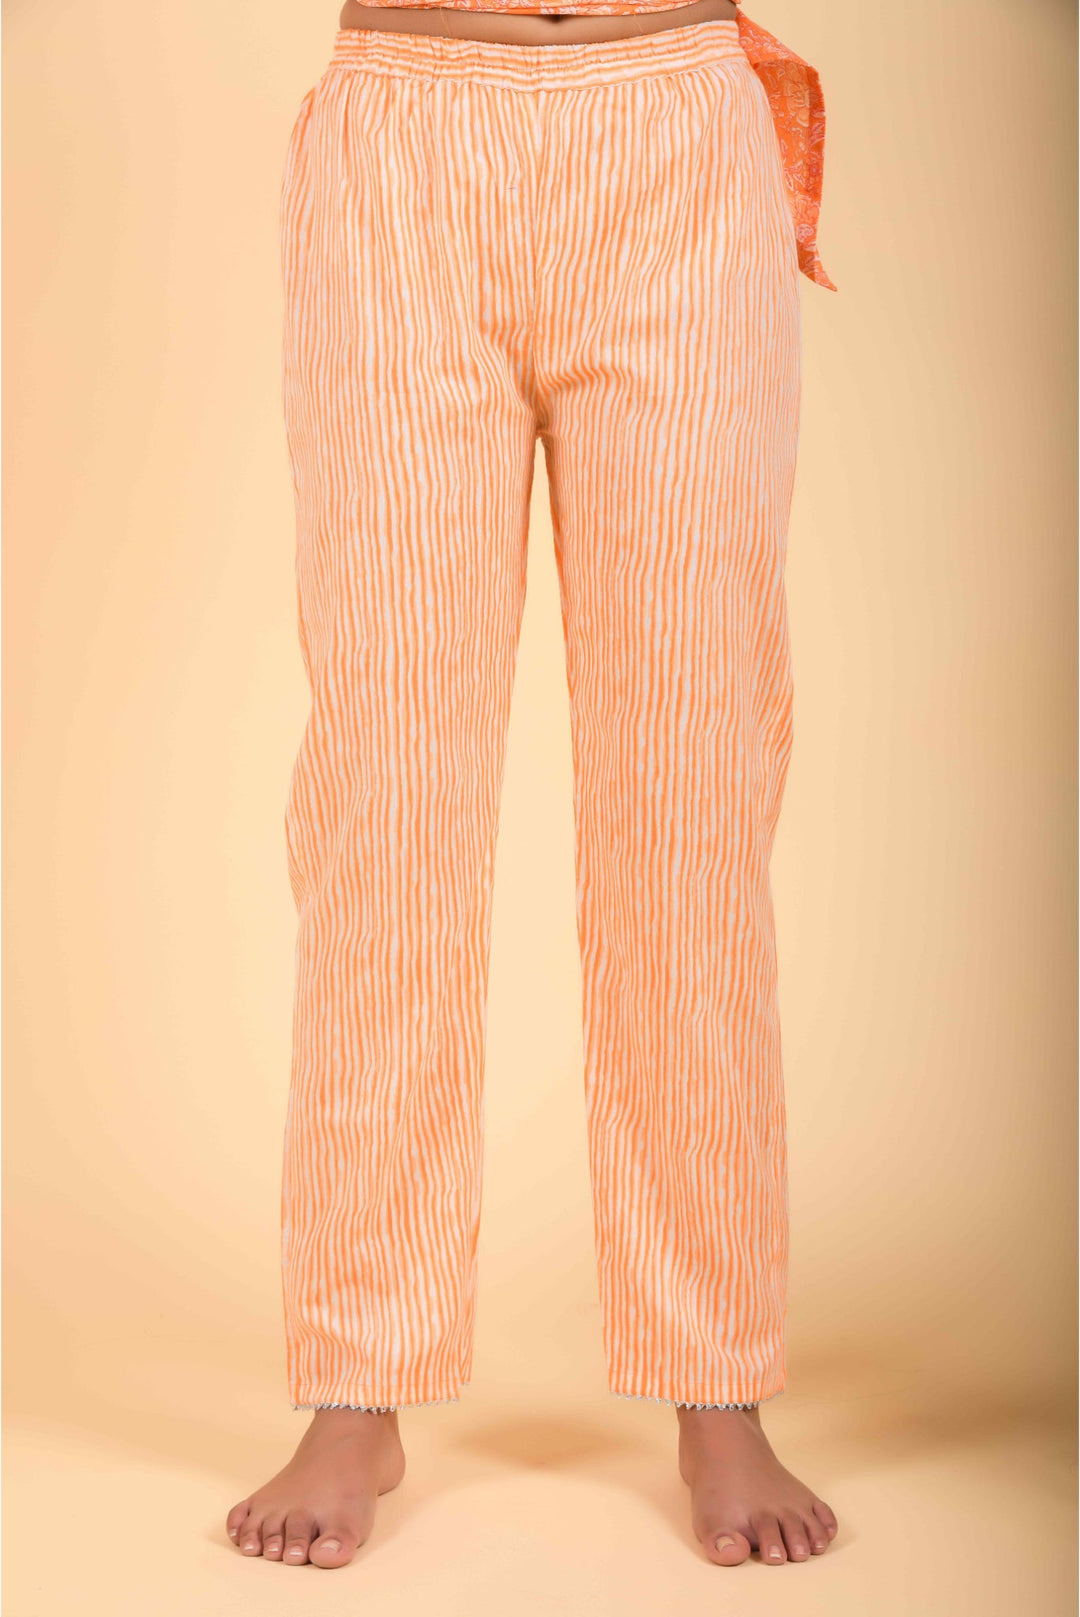 Anastay Classic 3 Piece Floral Orange Kurta & Lining pants accompanied.